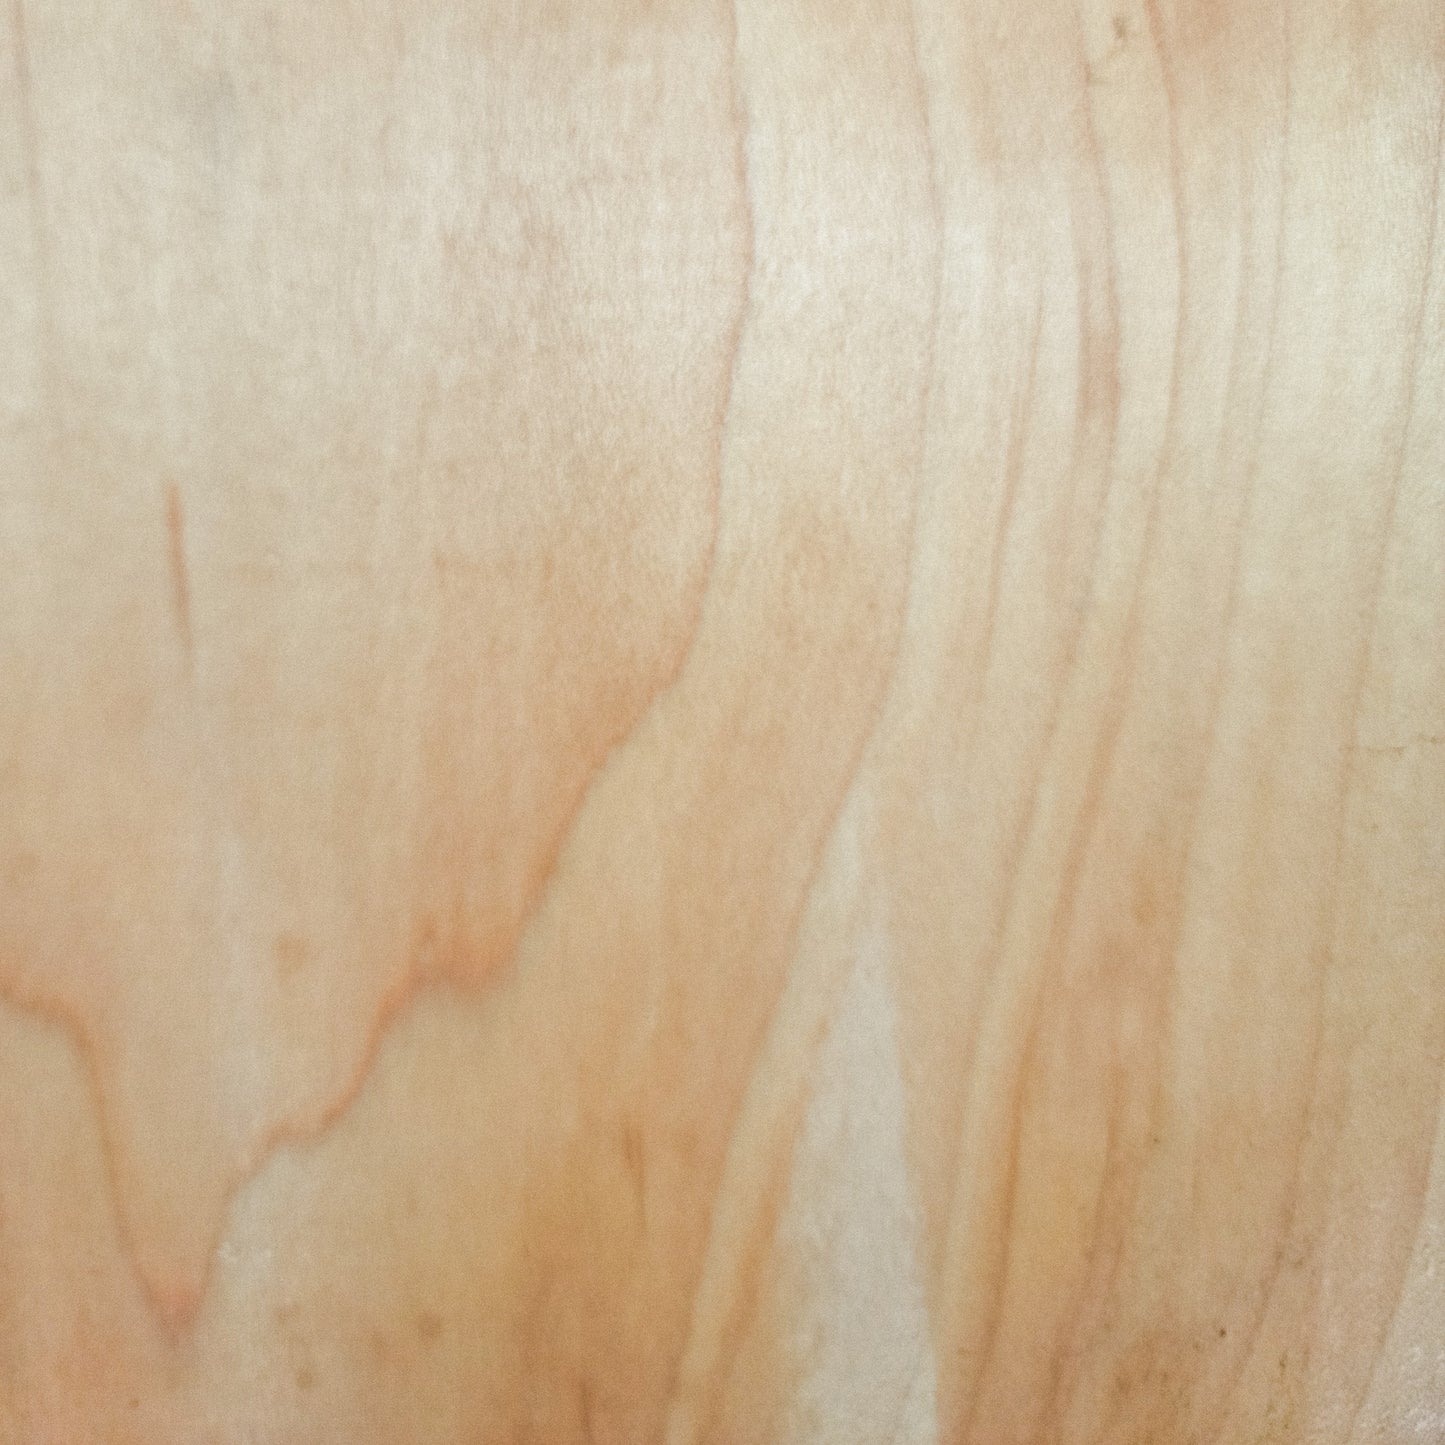 Maple (Hard) Lumber